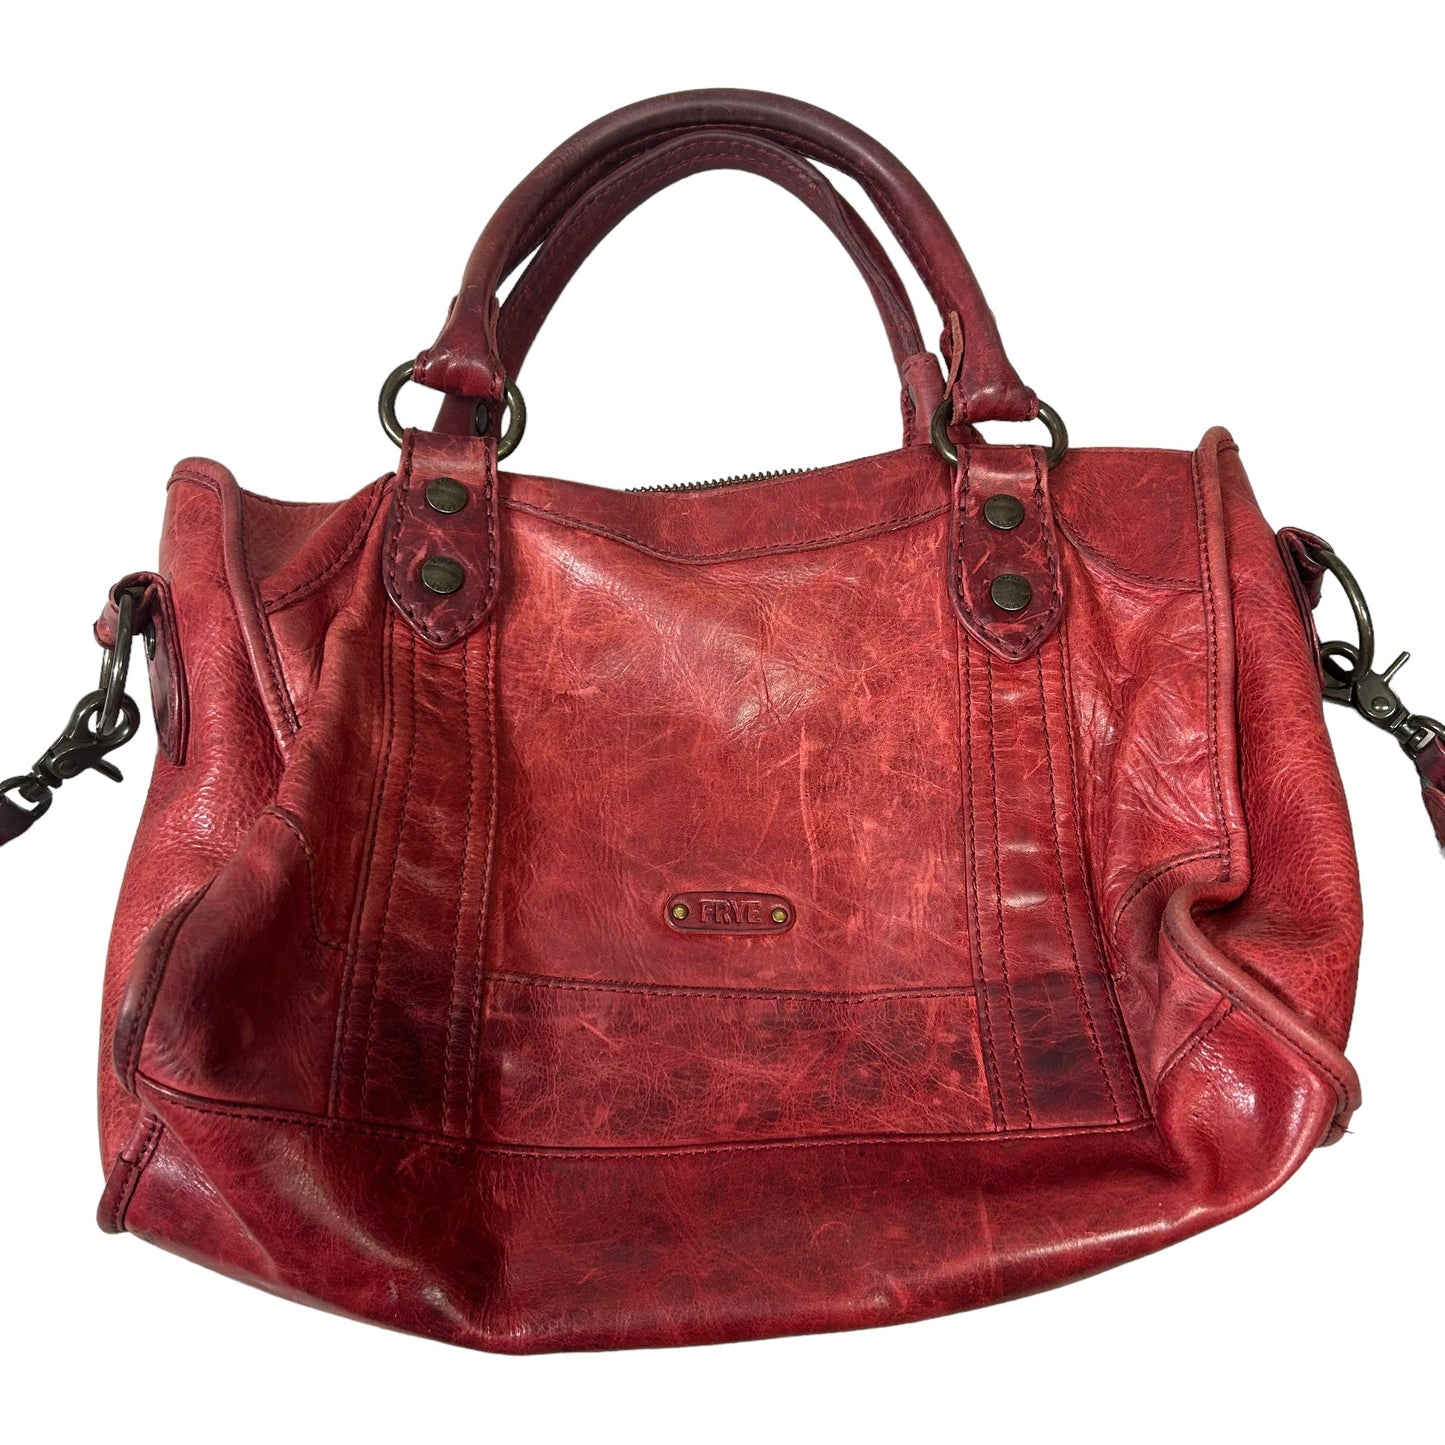 Handbag Leather Frye, Size Medium